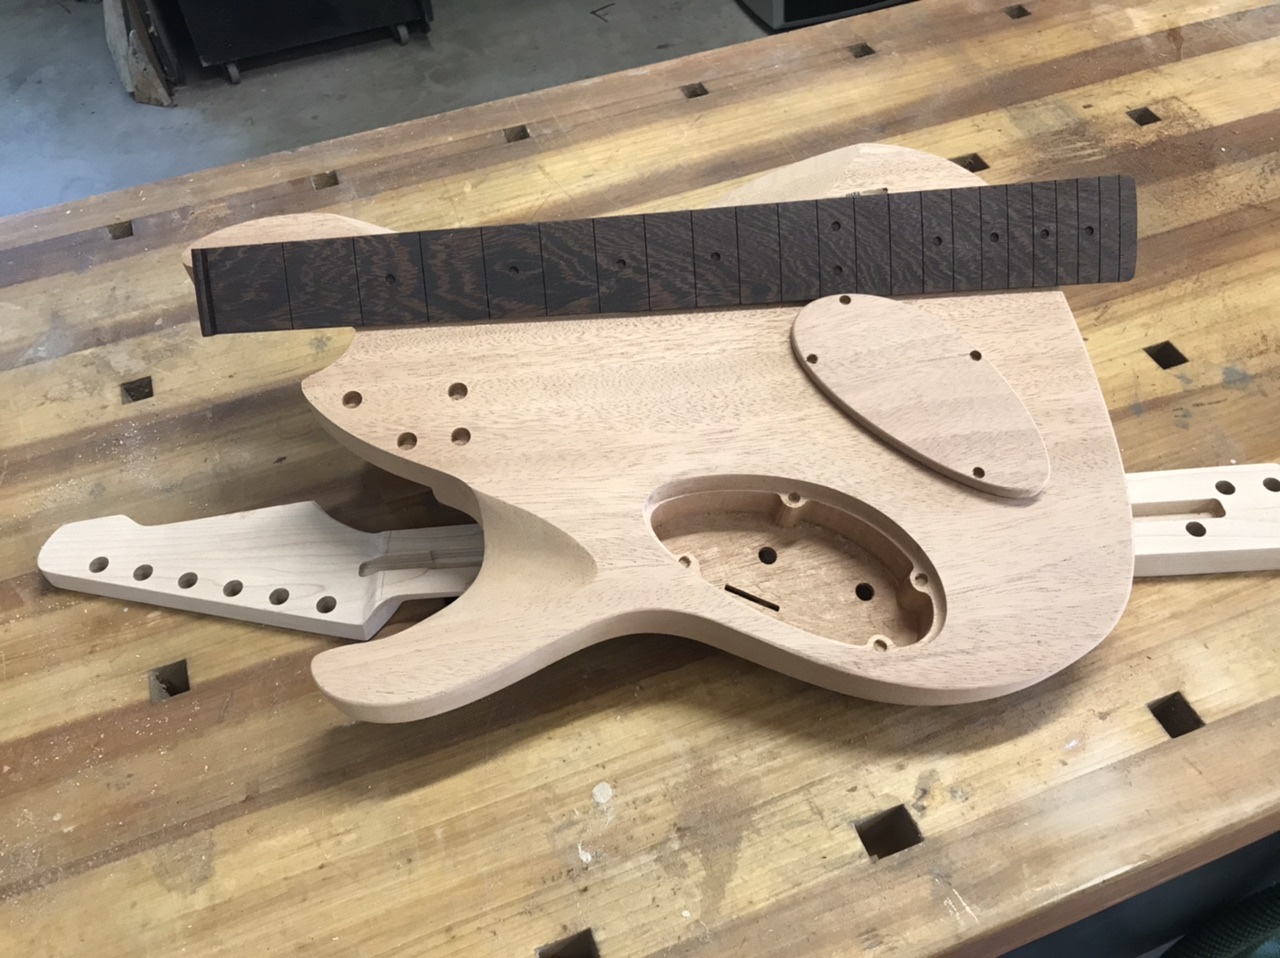 Guitar Pedalboard - Gallery - Carbide 3D Community Site